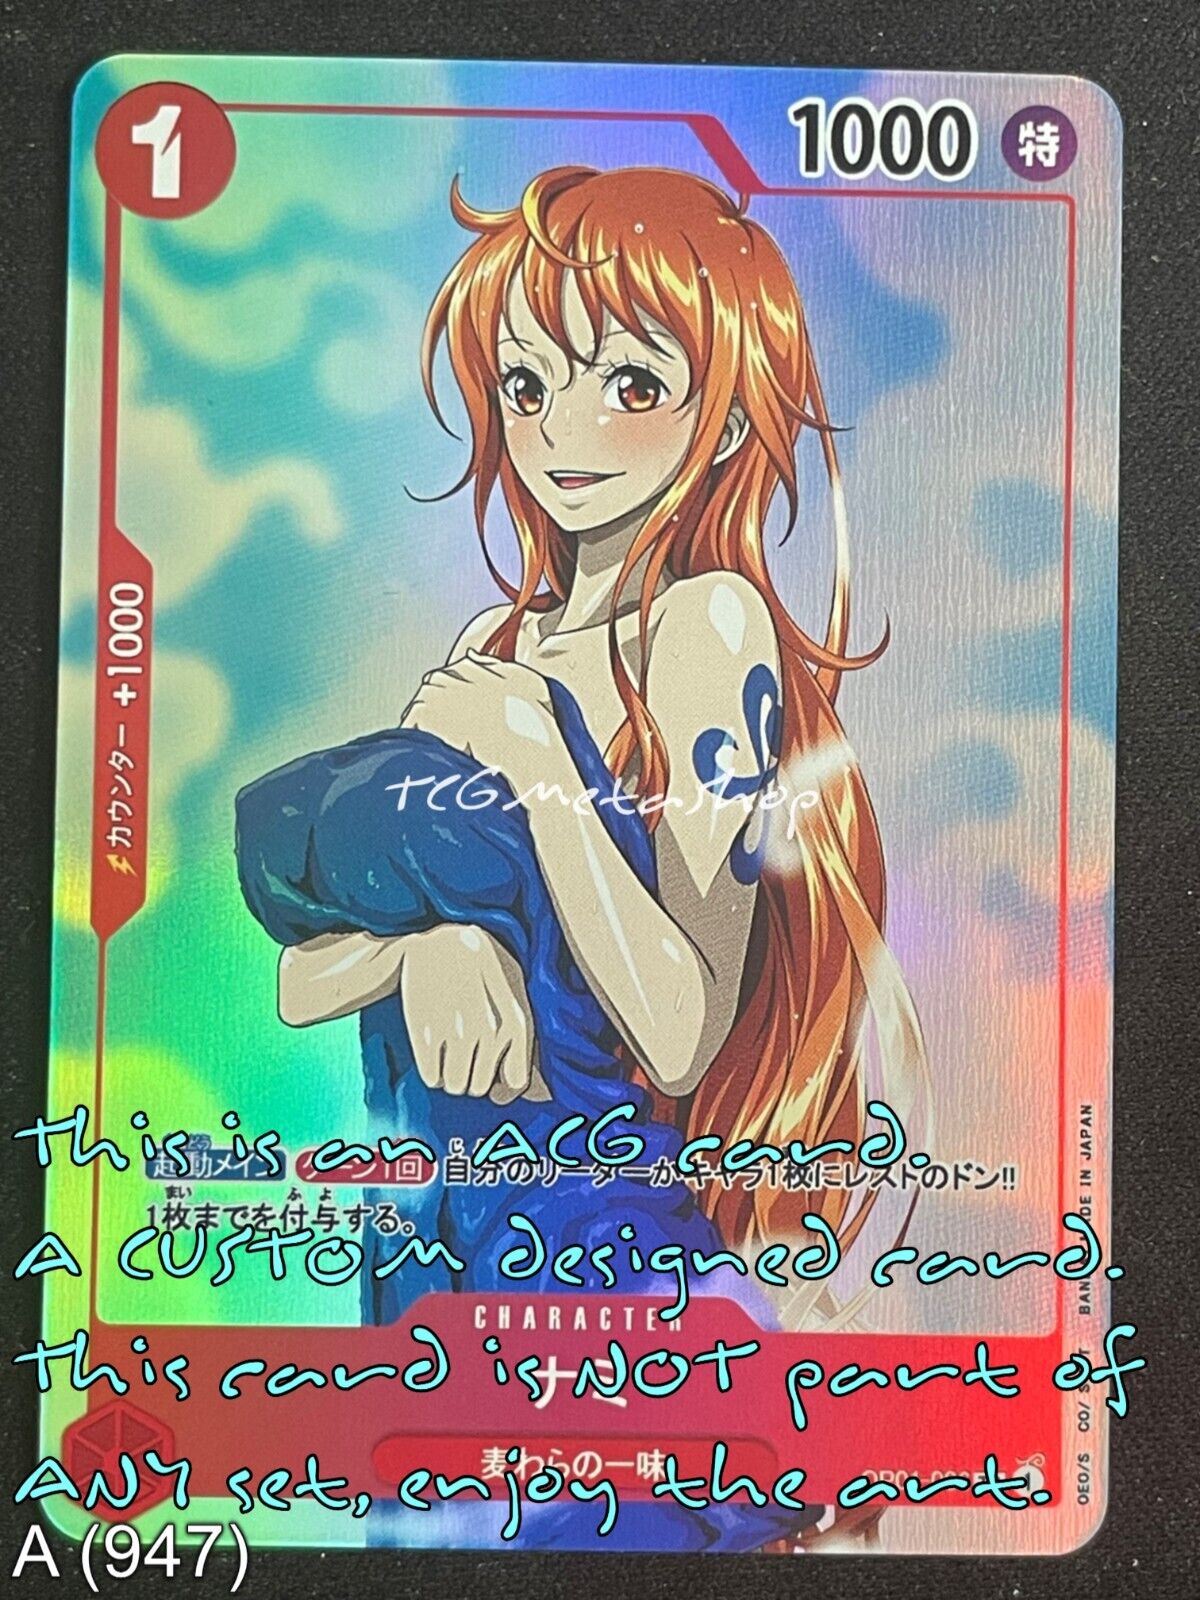 🔥 A 947 Nami One Piece Goddess Story Anime Waifu Card ACG 🔥